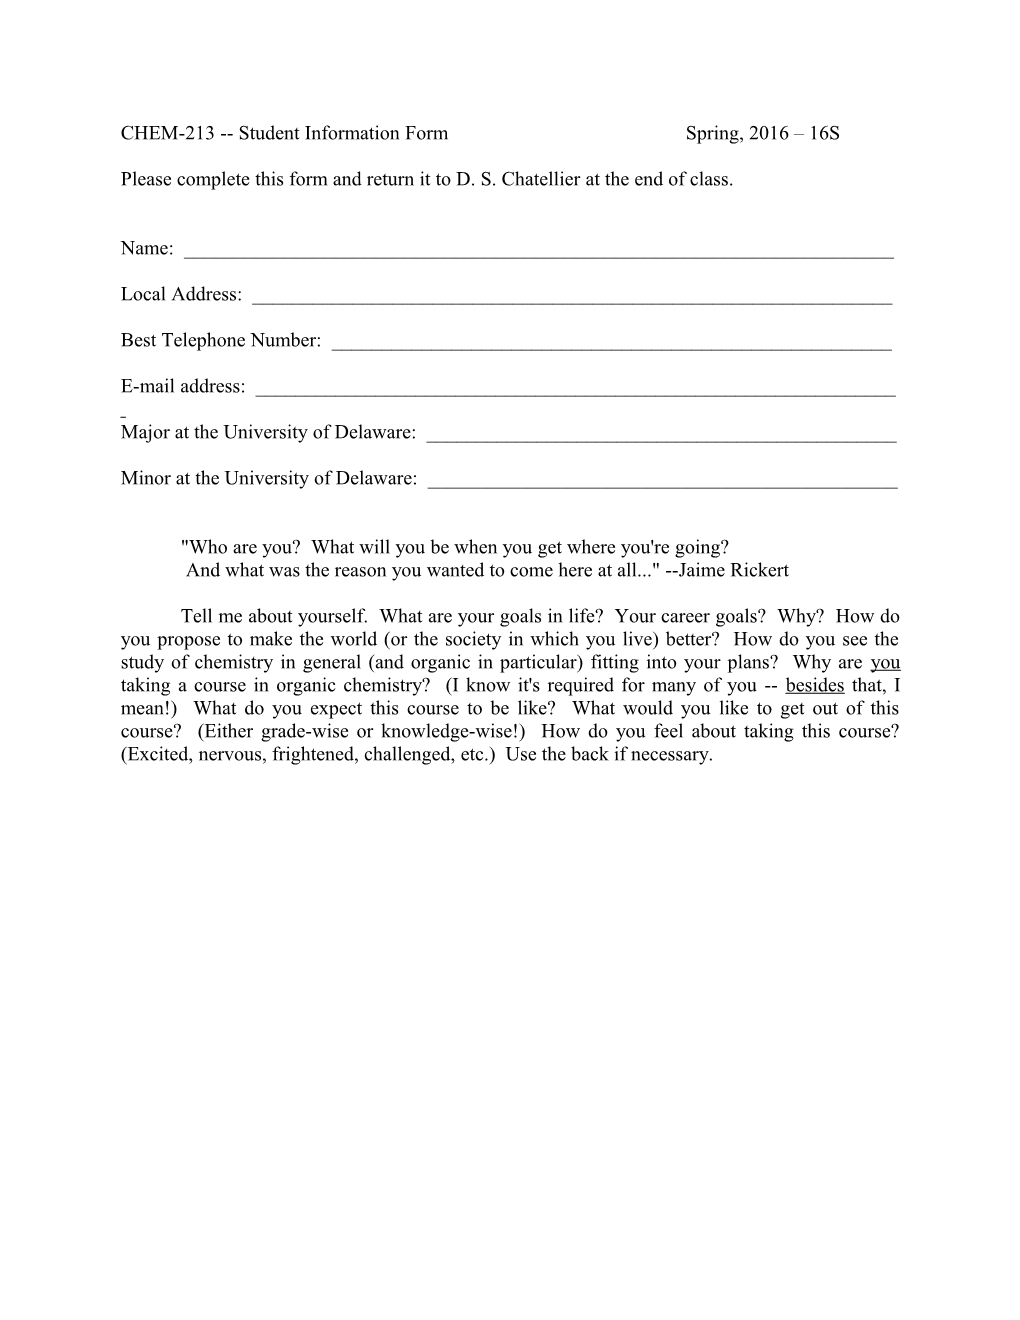 CHEM-213 Student Information Form